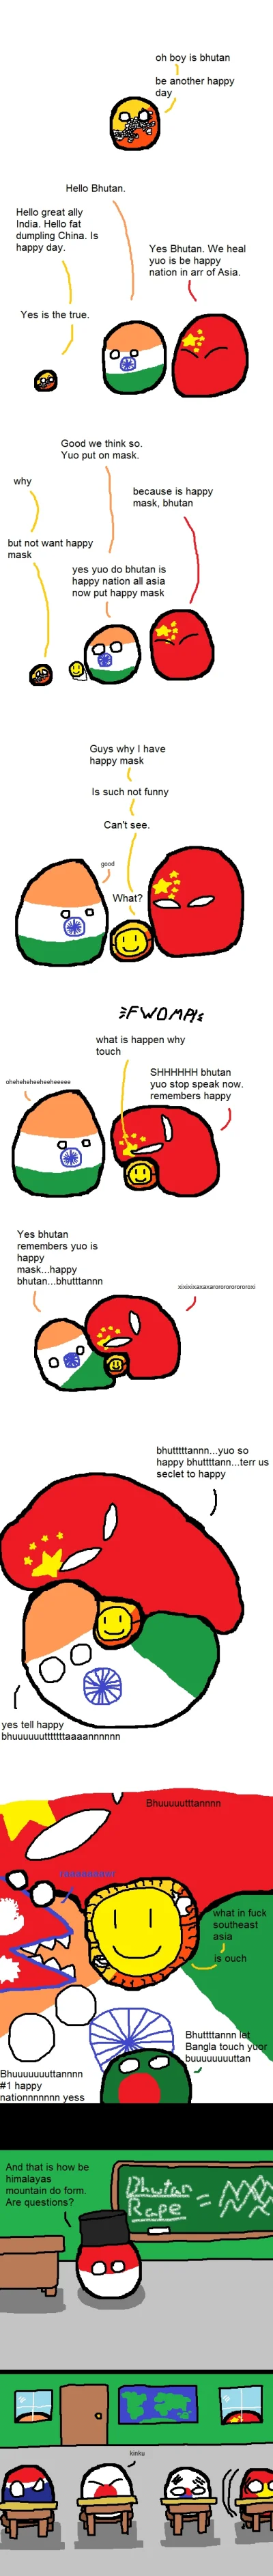 dumnie - @chore_kalafiory: Oh boy is Bhutan